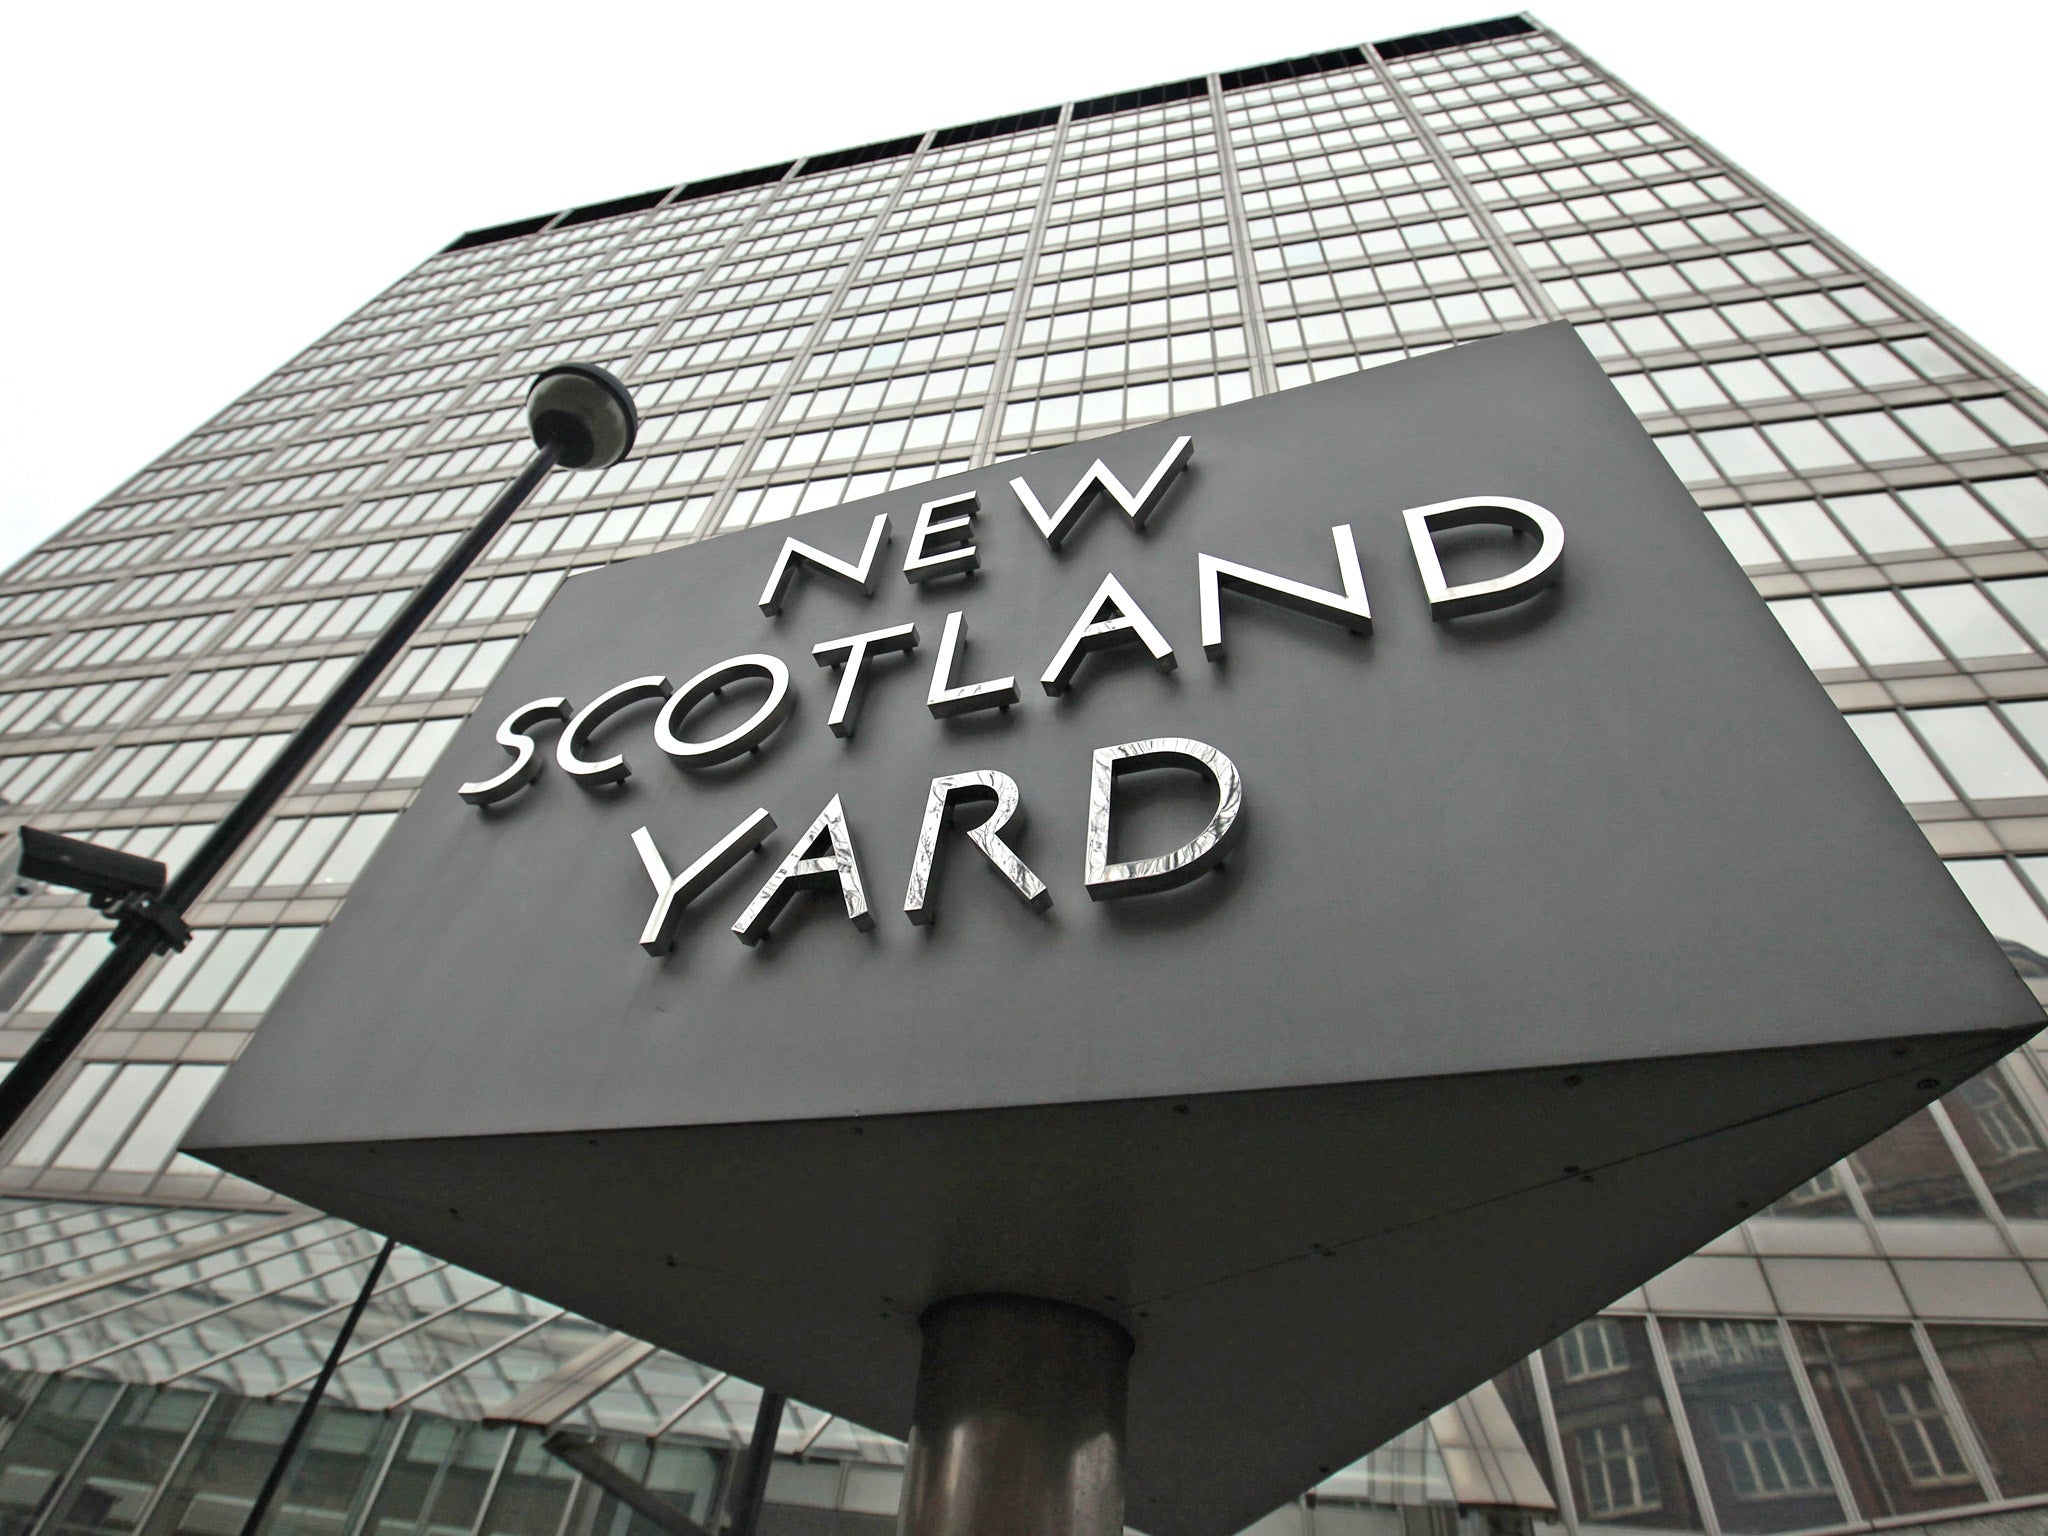 New Scotland Yard, the headquarters of the Metropolitan Police